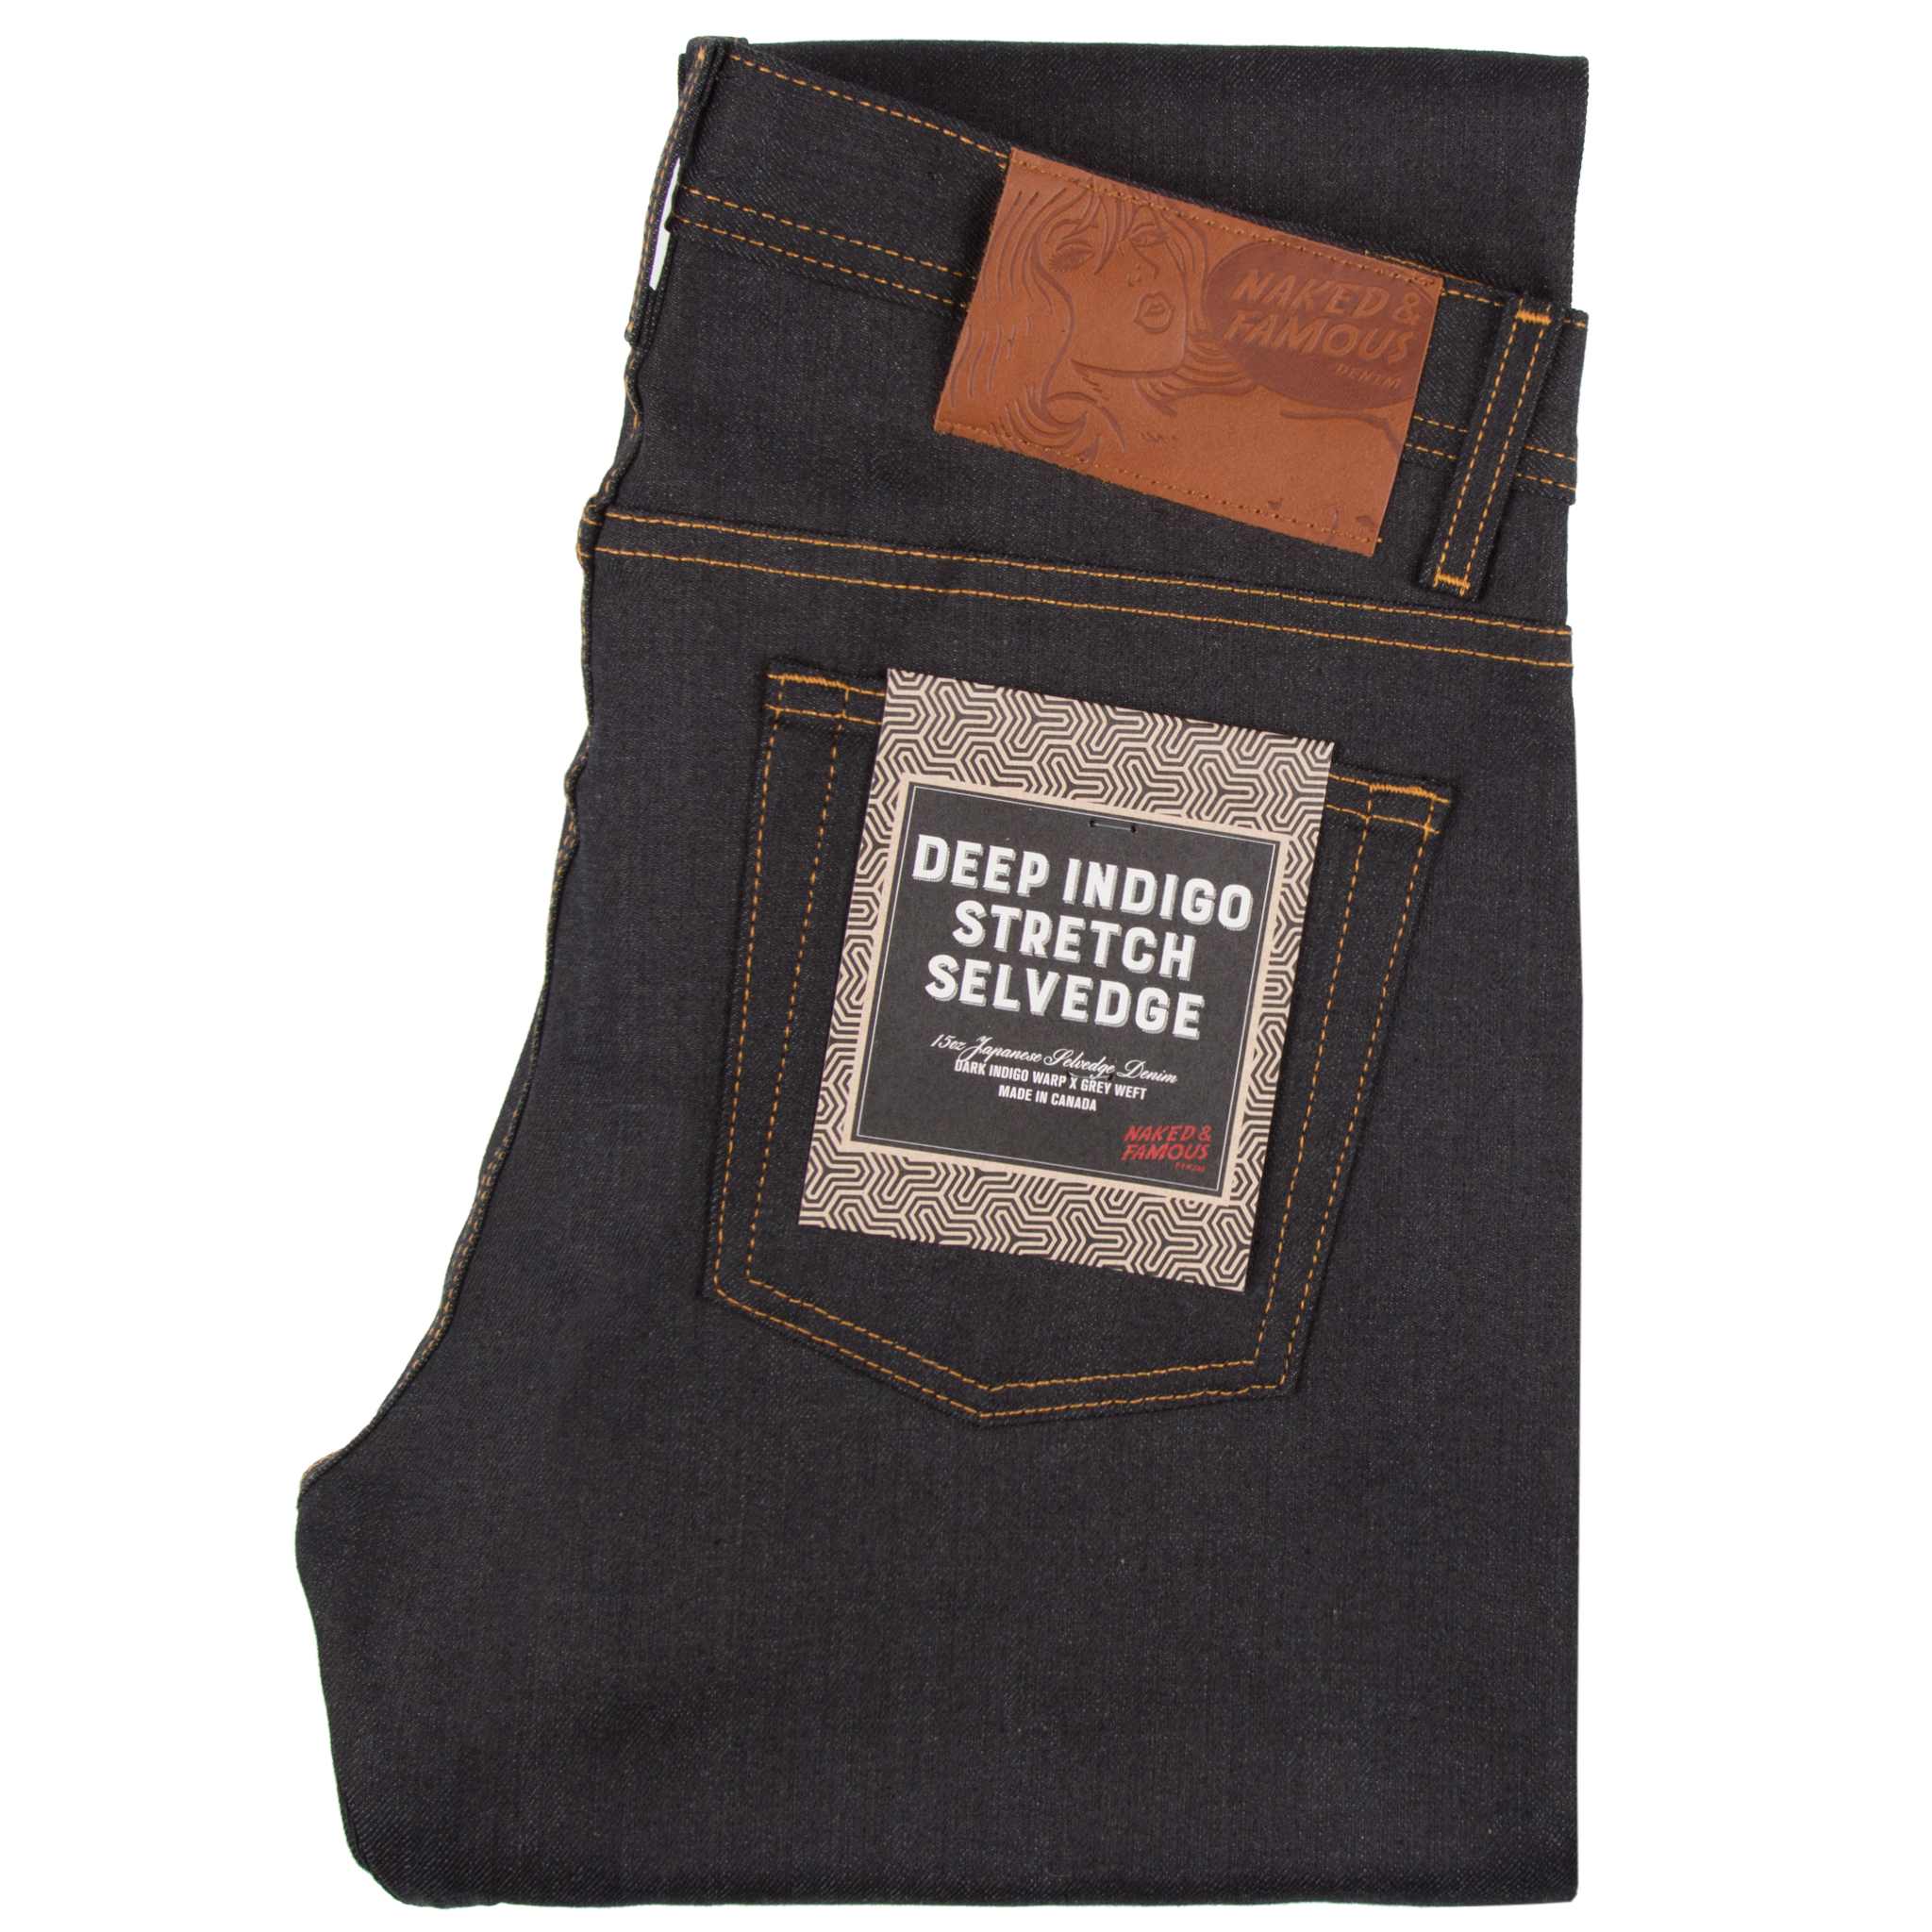  Deep Indigo Stretch Selvedge Jeans Folded 